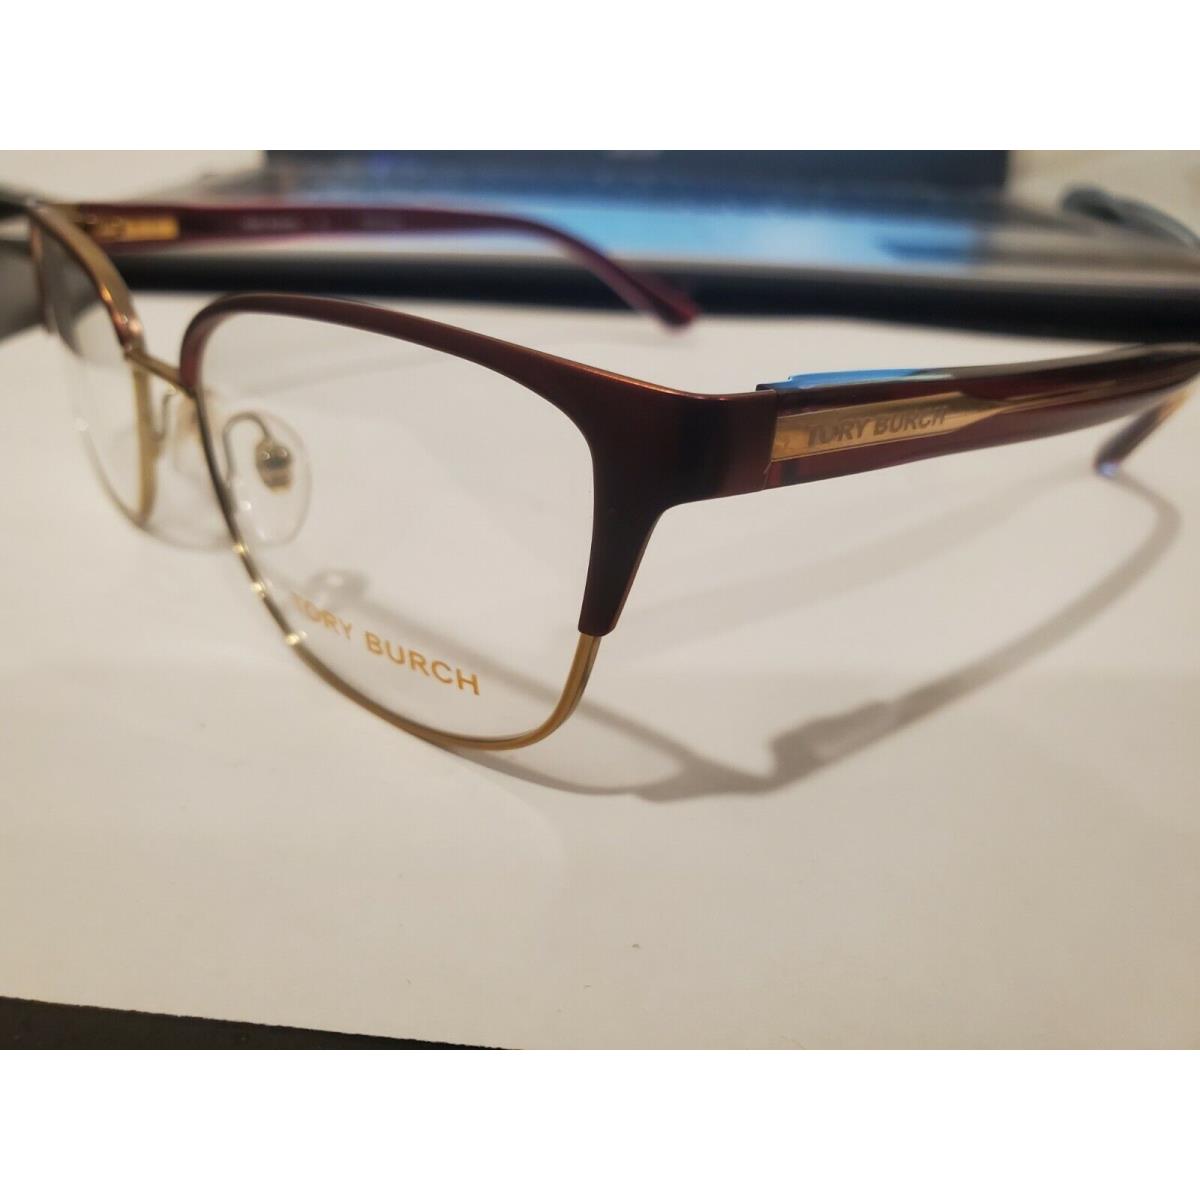 Tory Burch eyeglasses  - Gold Frame 1